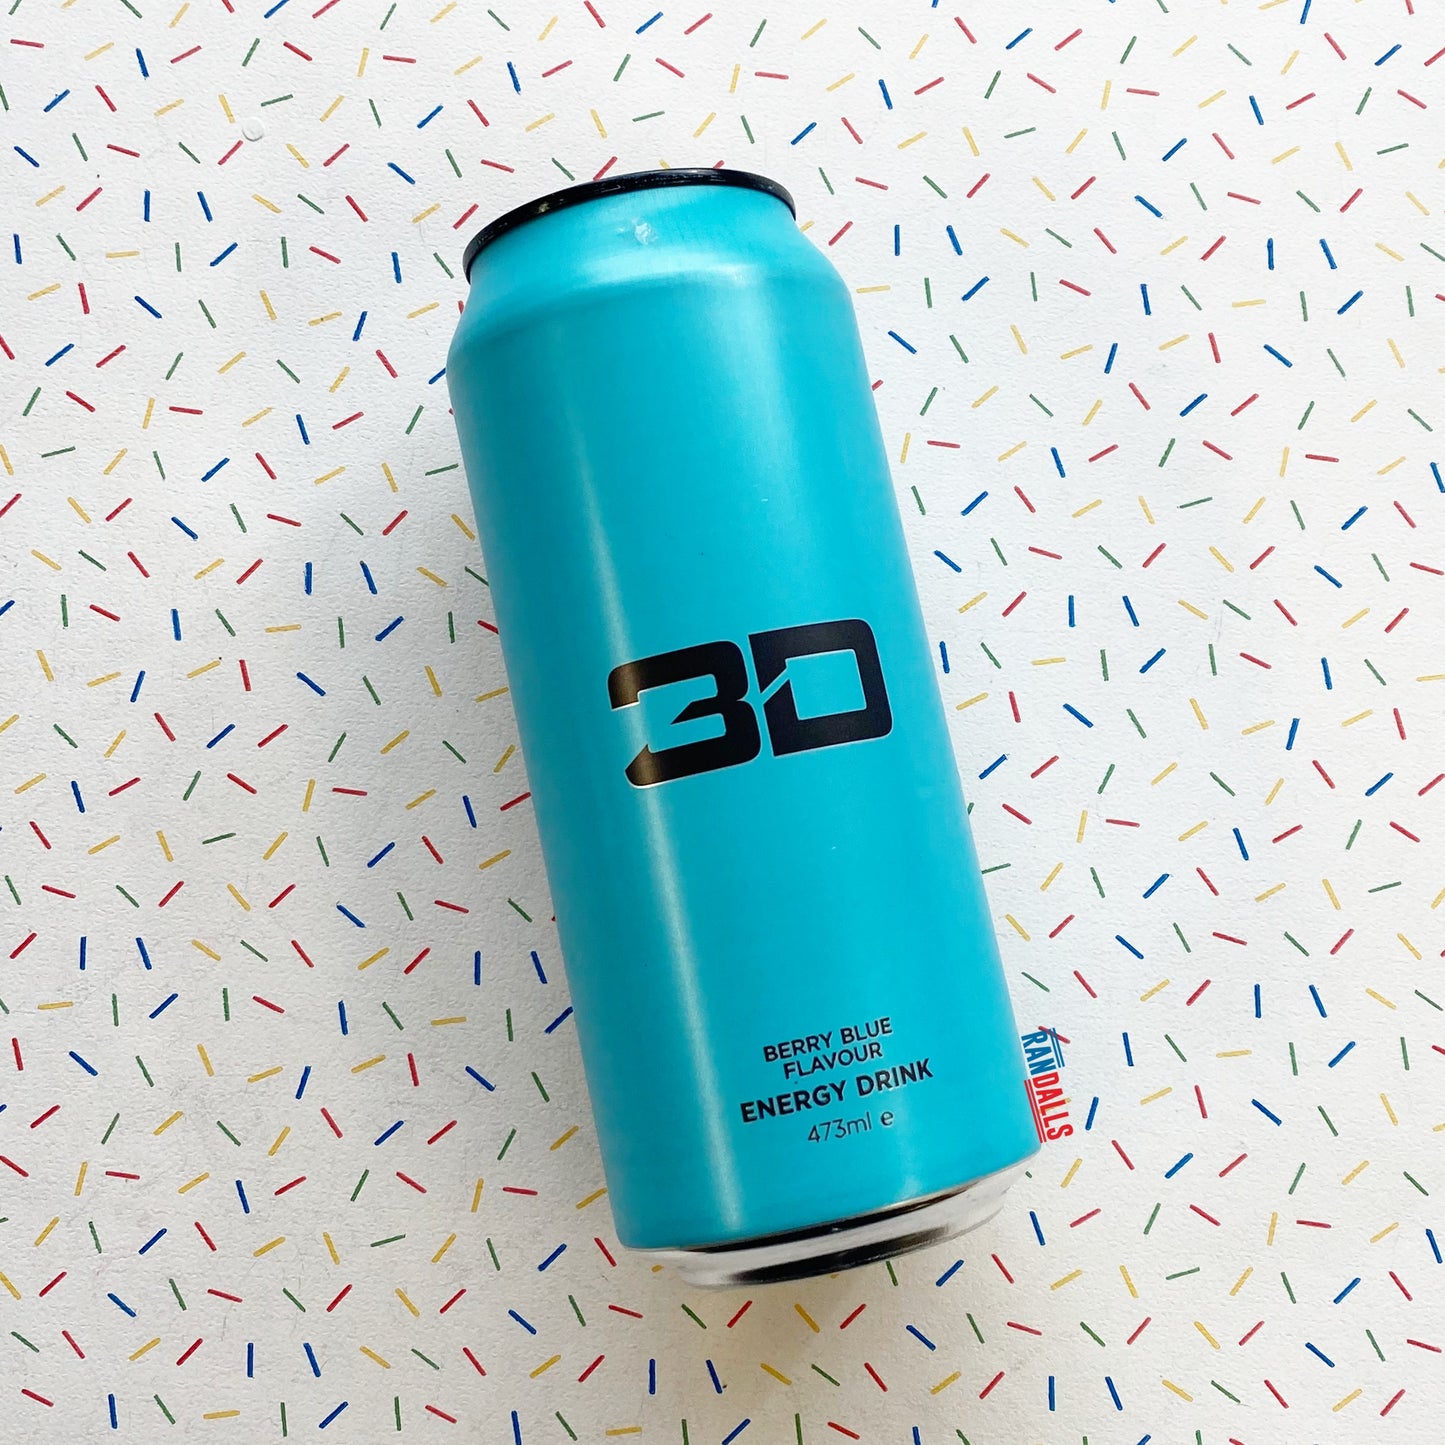 3d energy berry blue, energy drink, caffeine